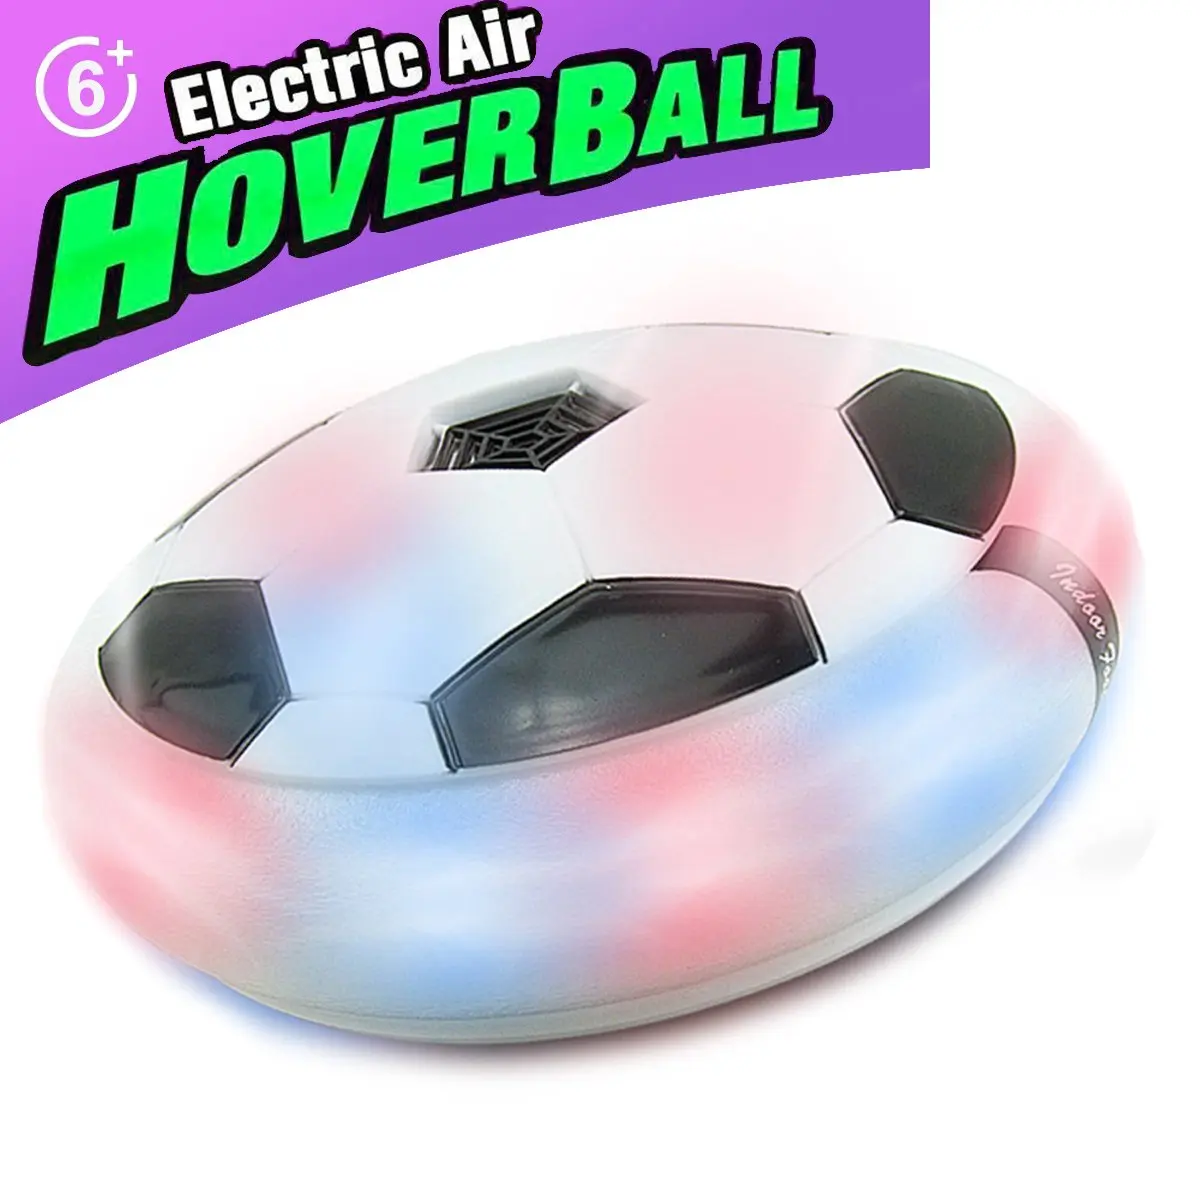 Hover Soccer Ball Electric Air Power Soccer Disc Kids Toys Football W/ LED Light 